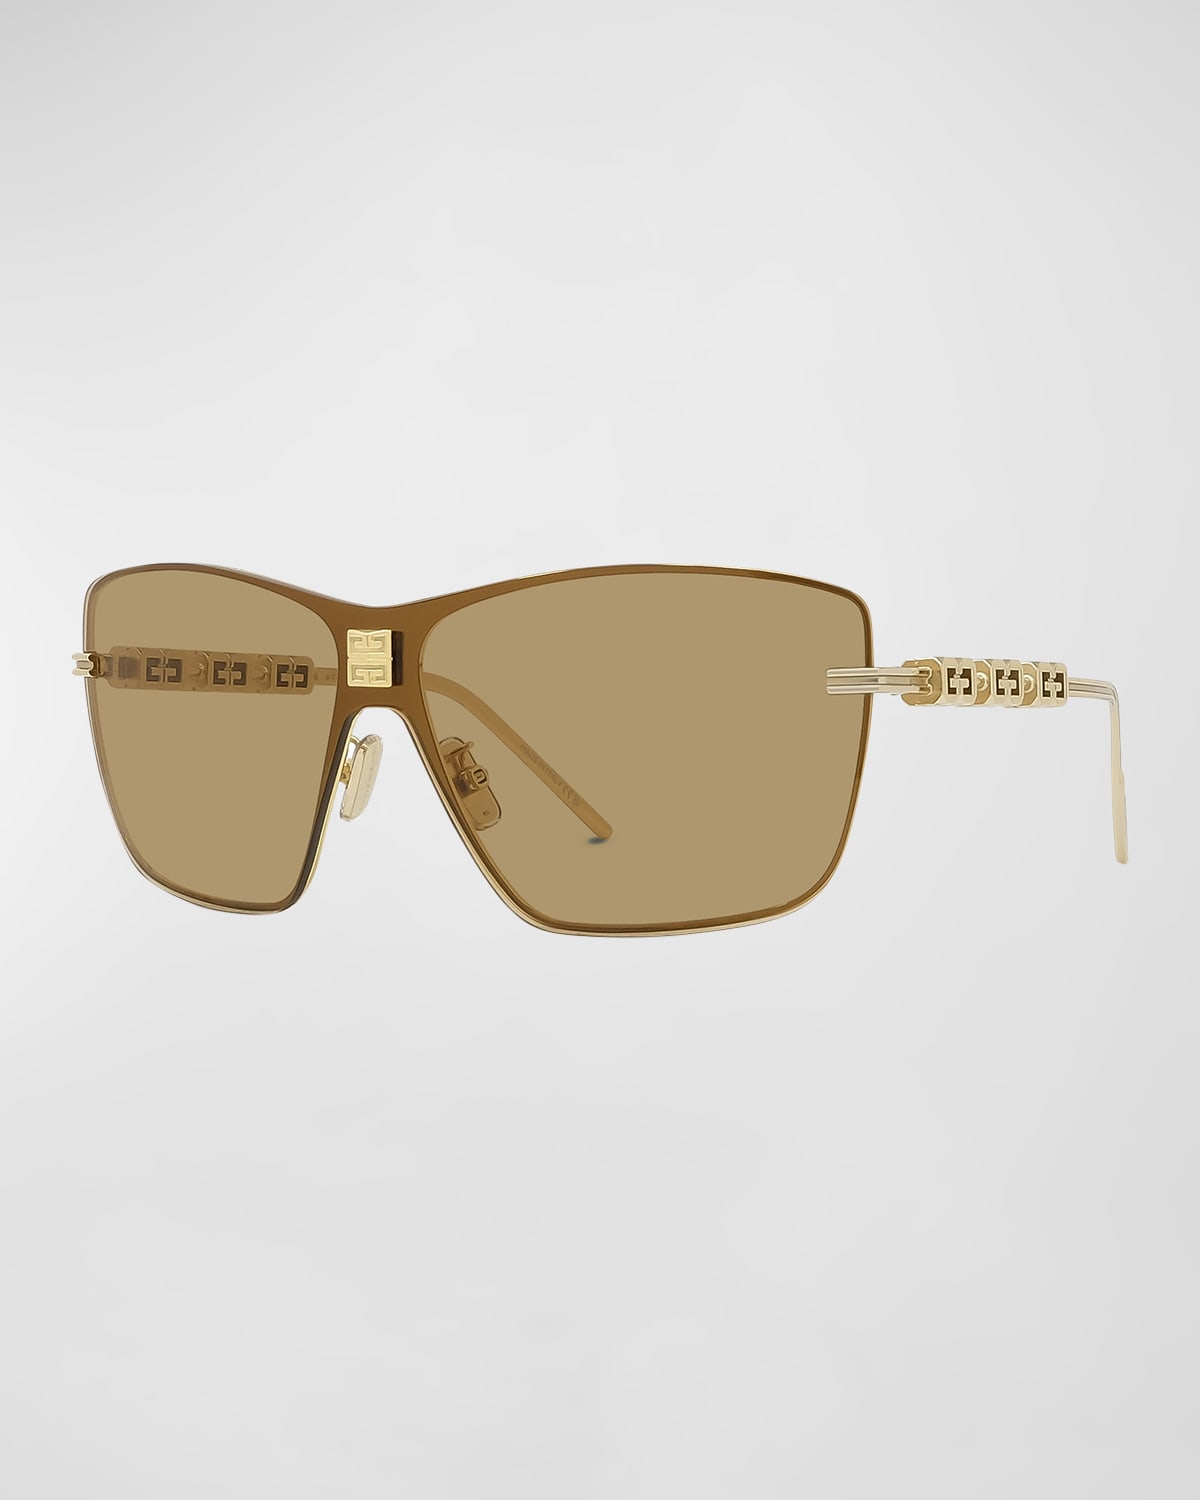 4G Metal Alloy Shield Sunglasses